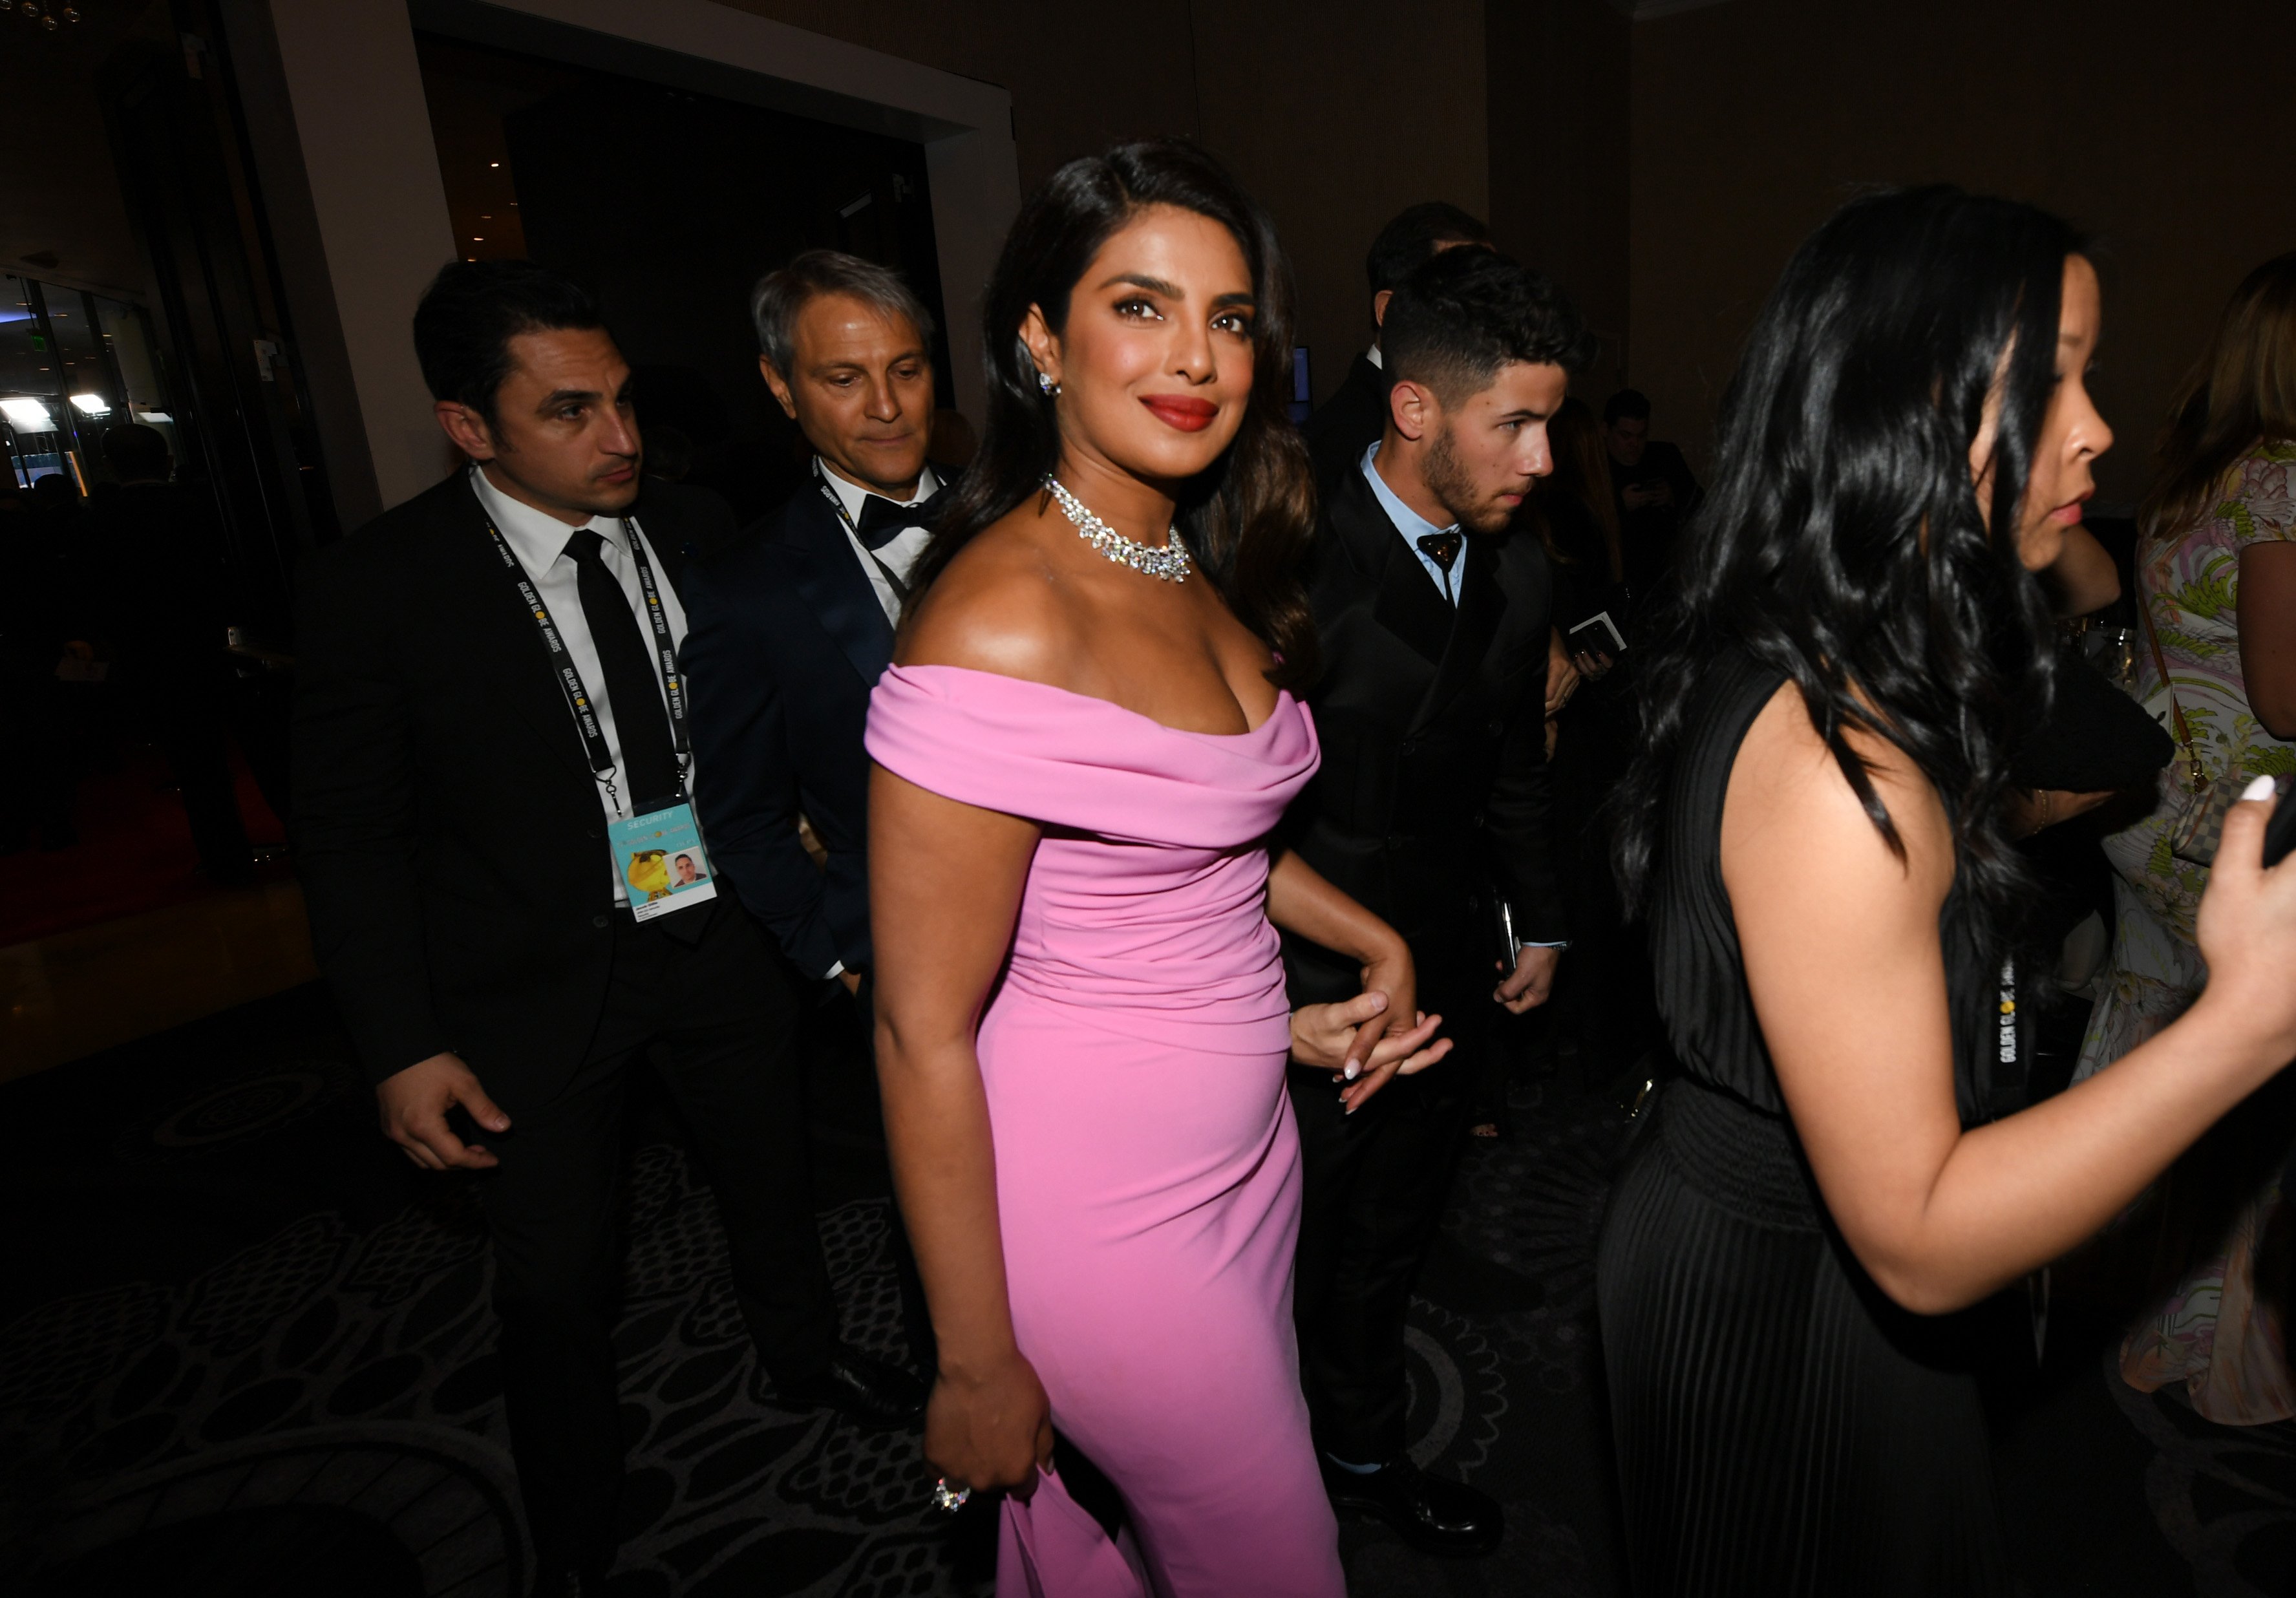 Priyanka Chopra Jonas backstage at the Golden Globes